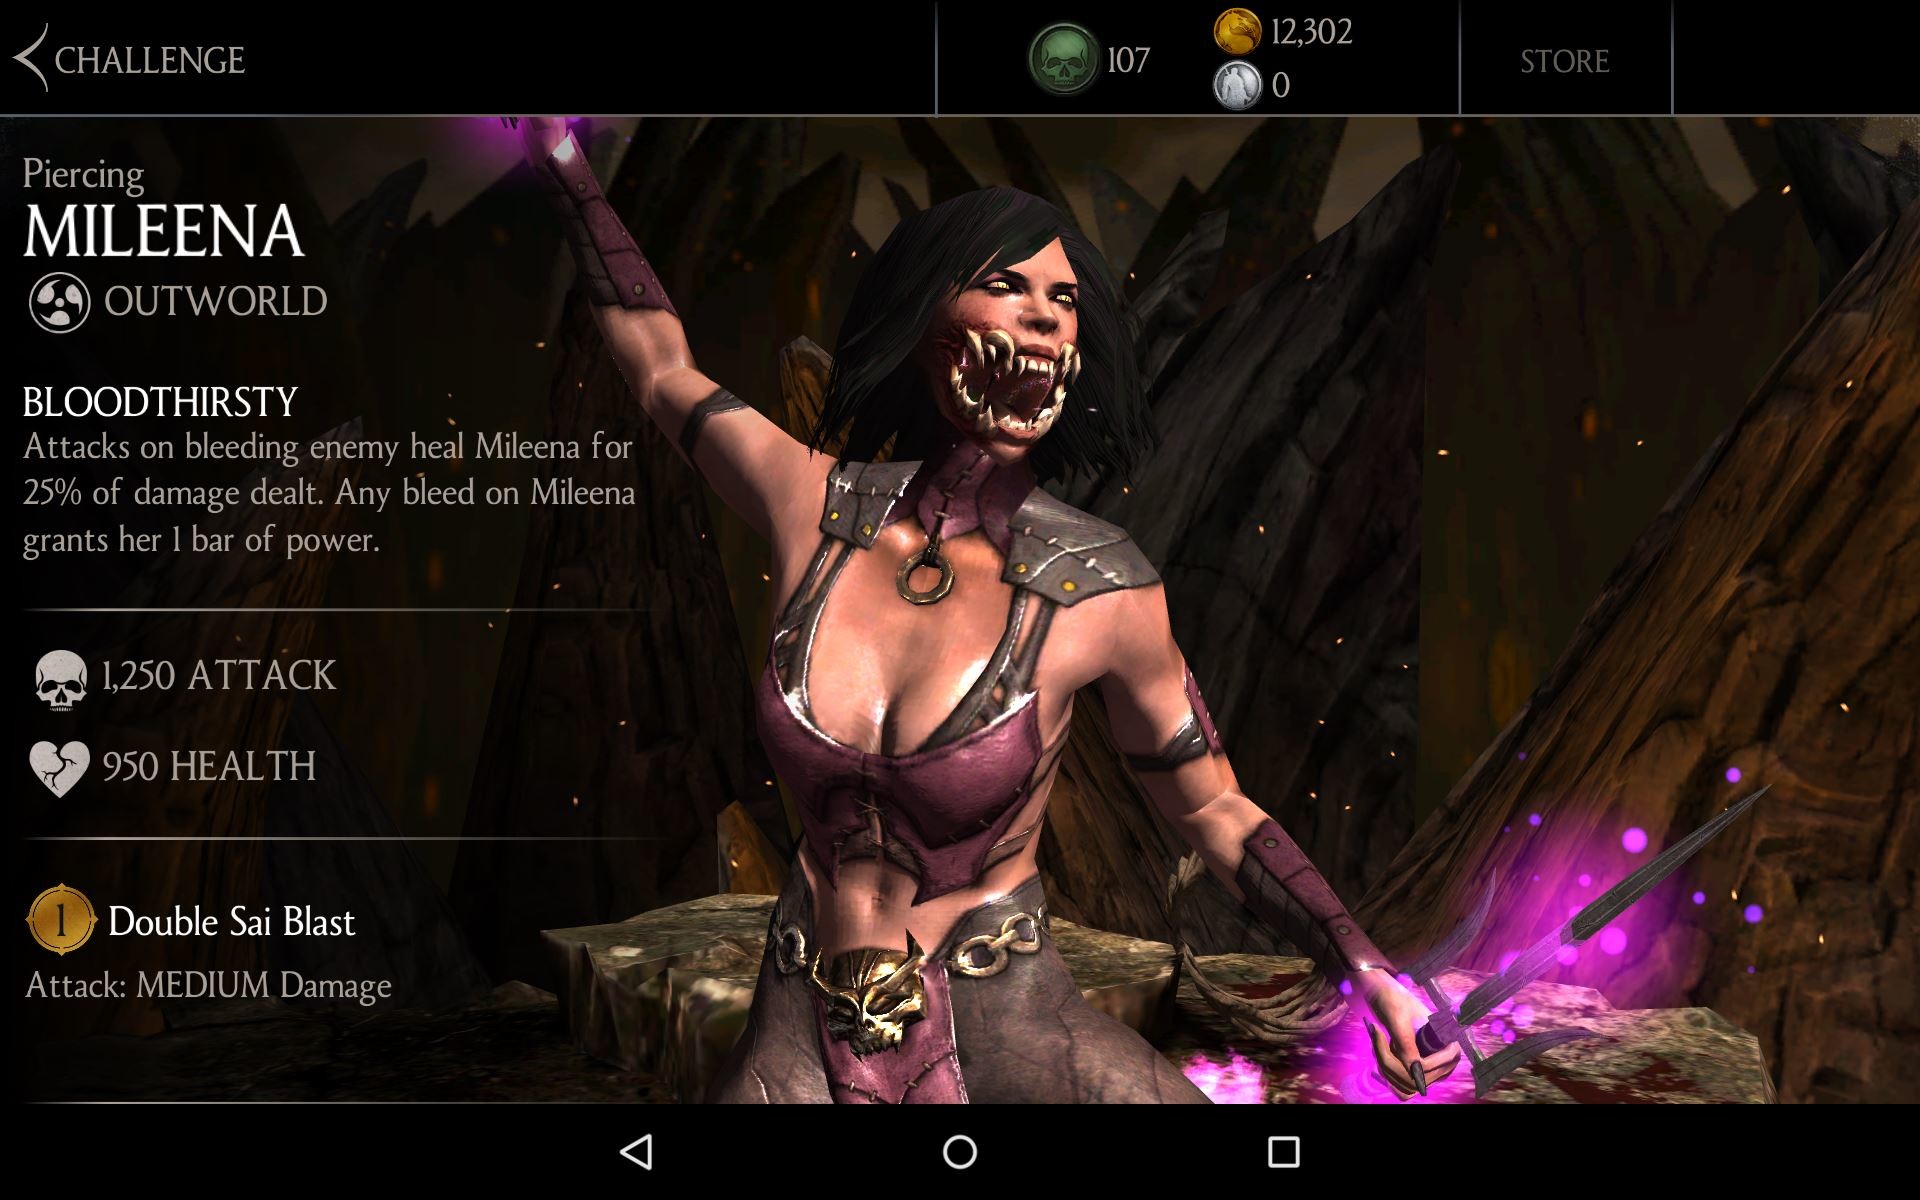 1920x1200 ... Mortal Kombat X Mobile Piercing Mileena Challenge Screenshot 03 ...